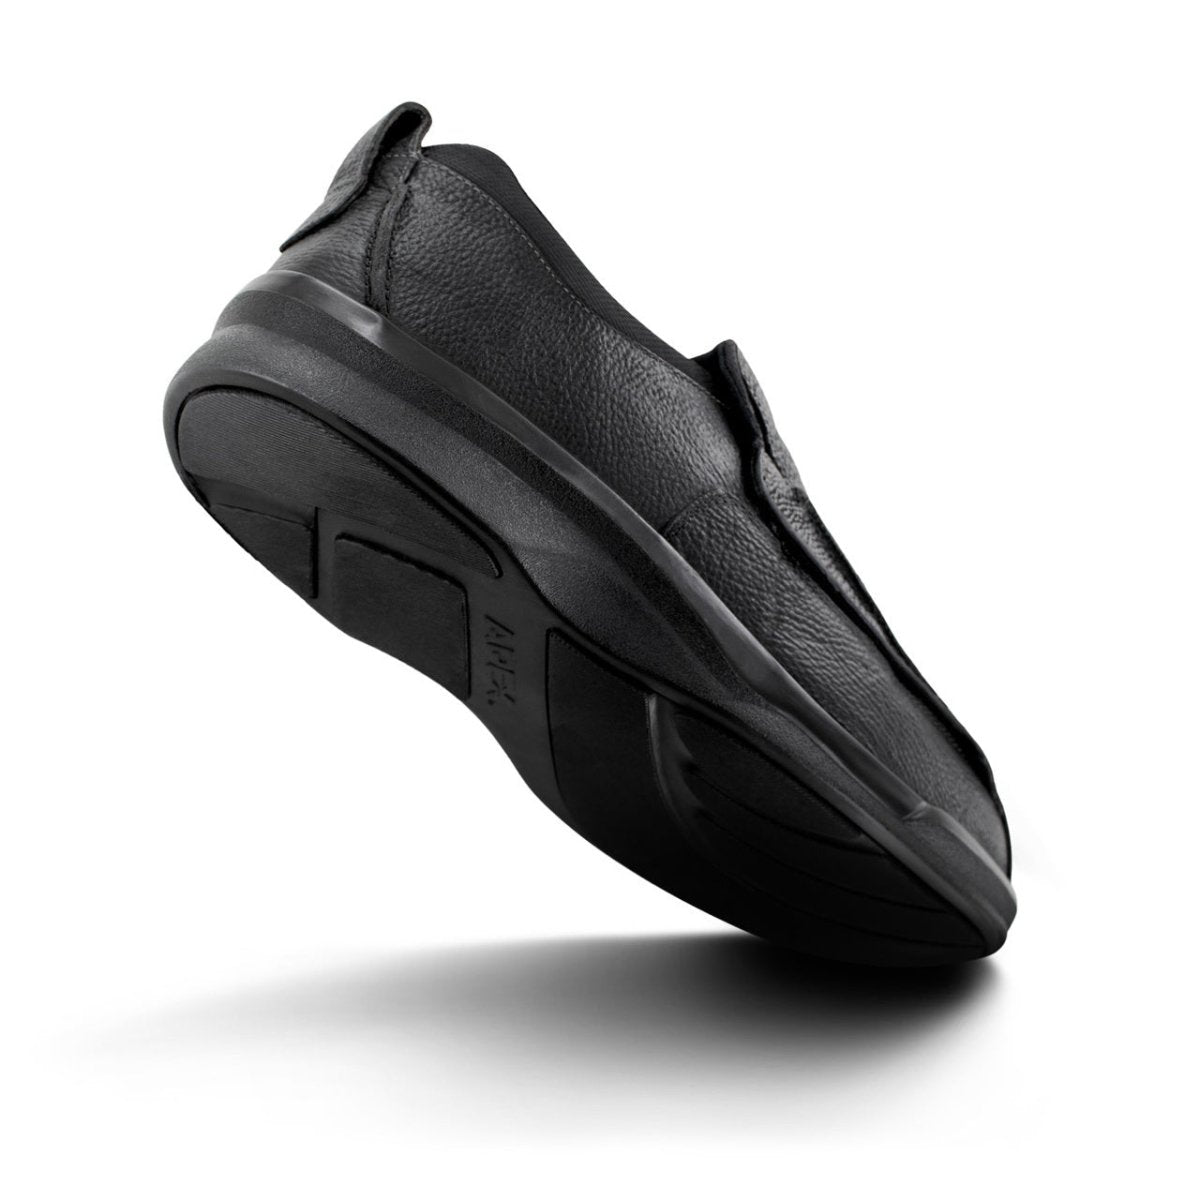 APEX B5000M BIOMECHANICAL MEN'S CLASSIC MOC DRESS SHOE IN BLACK VELCRO - TLW Shoes